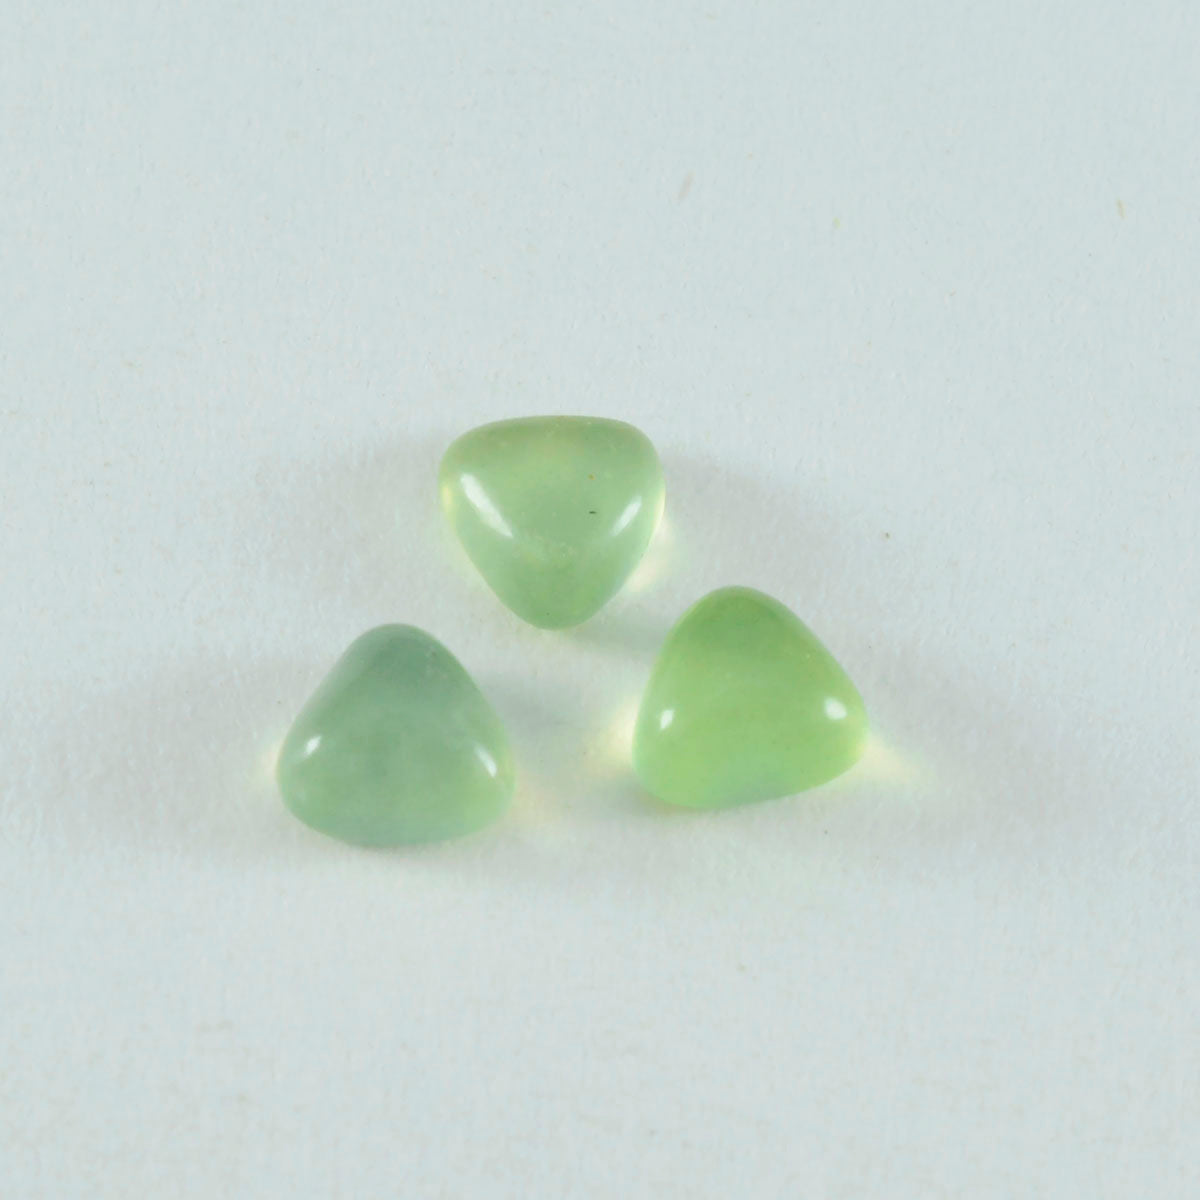 Riyogems 1PC Green Prehnite Cabochon 12x12 mm Trillion Shape startling Quality Loose Gems